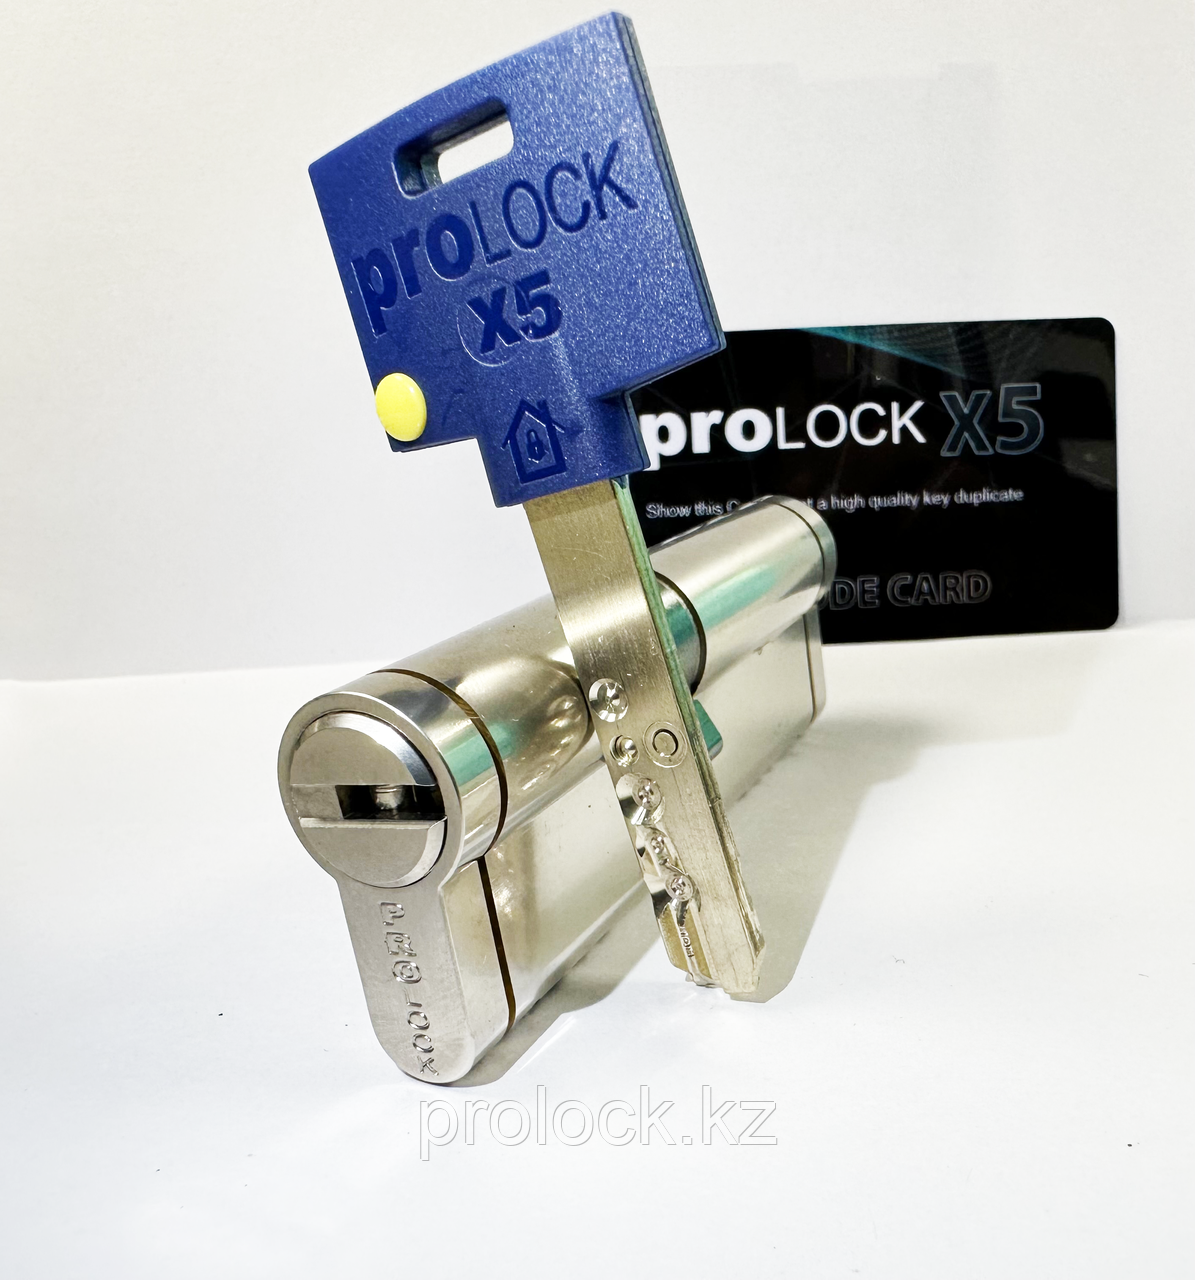 Цилиндр замка премиум класса PROLOCK X5, размер 35/45